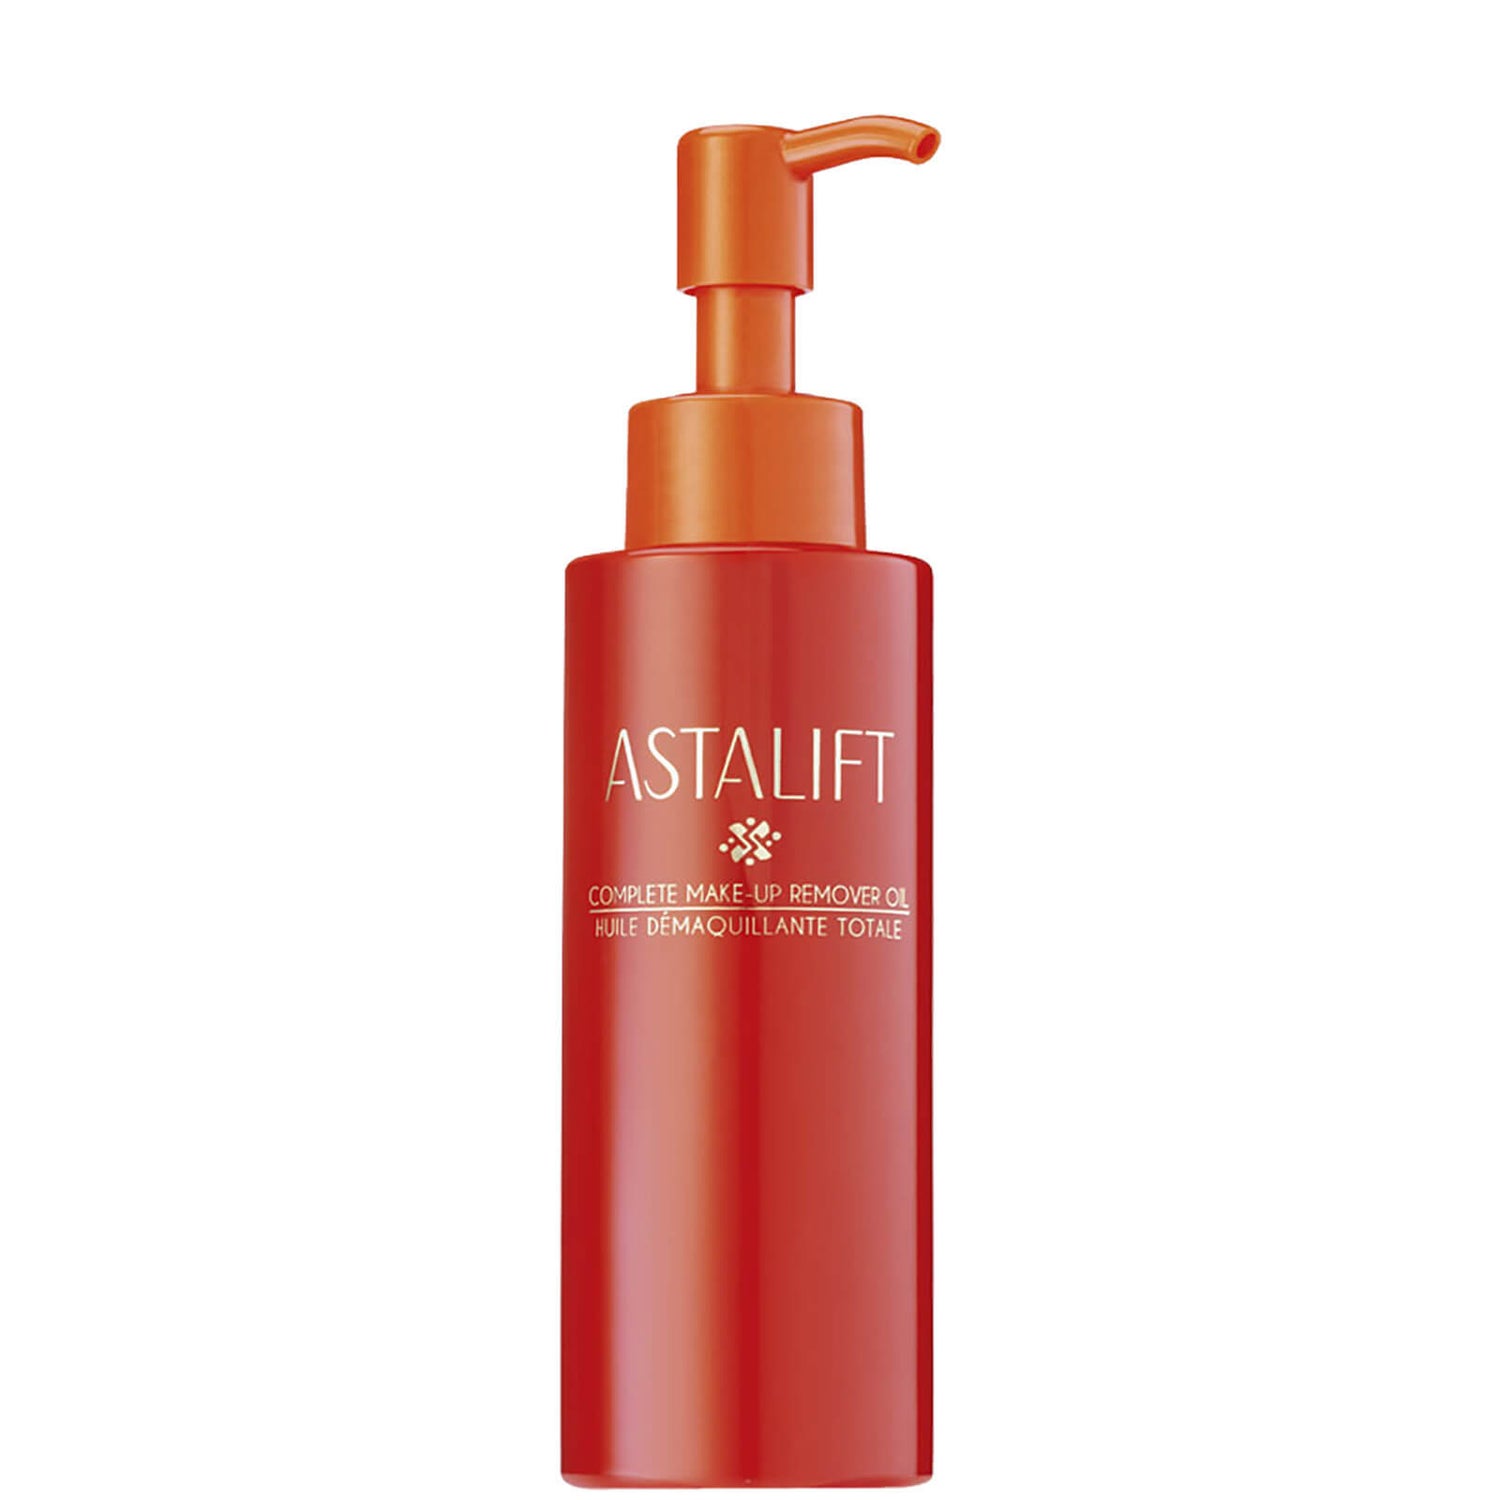 Astalift Complete Make-Up Remover Oil (120 ml)